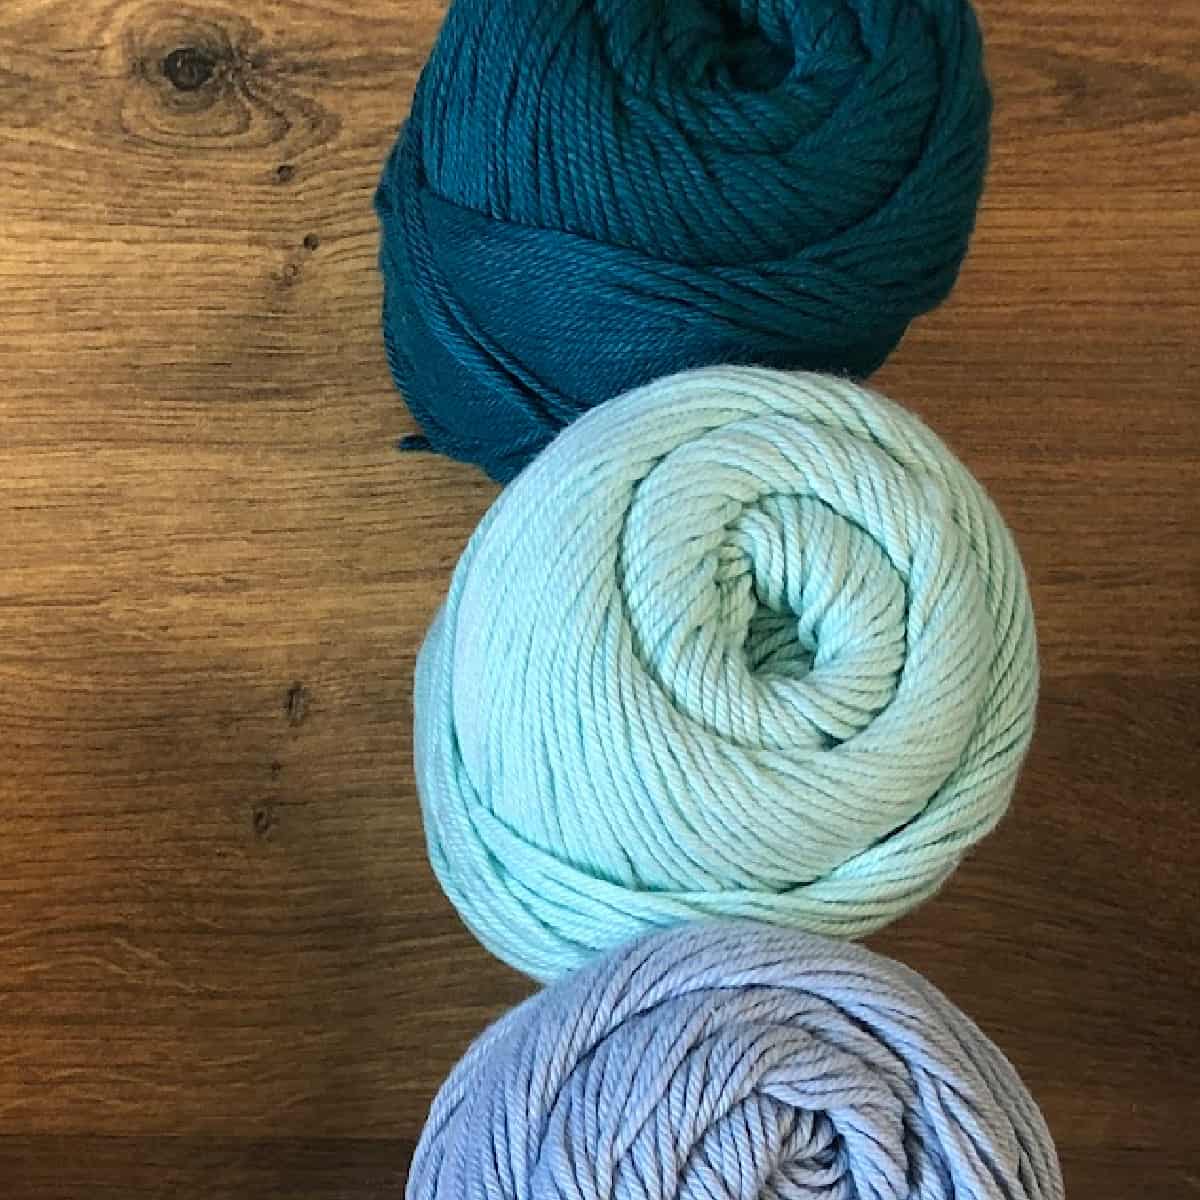 The Best Yarn for Crochet Dishcloths